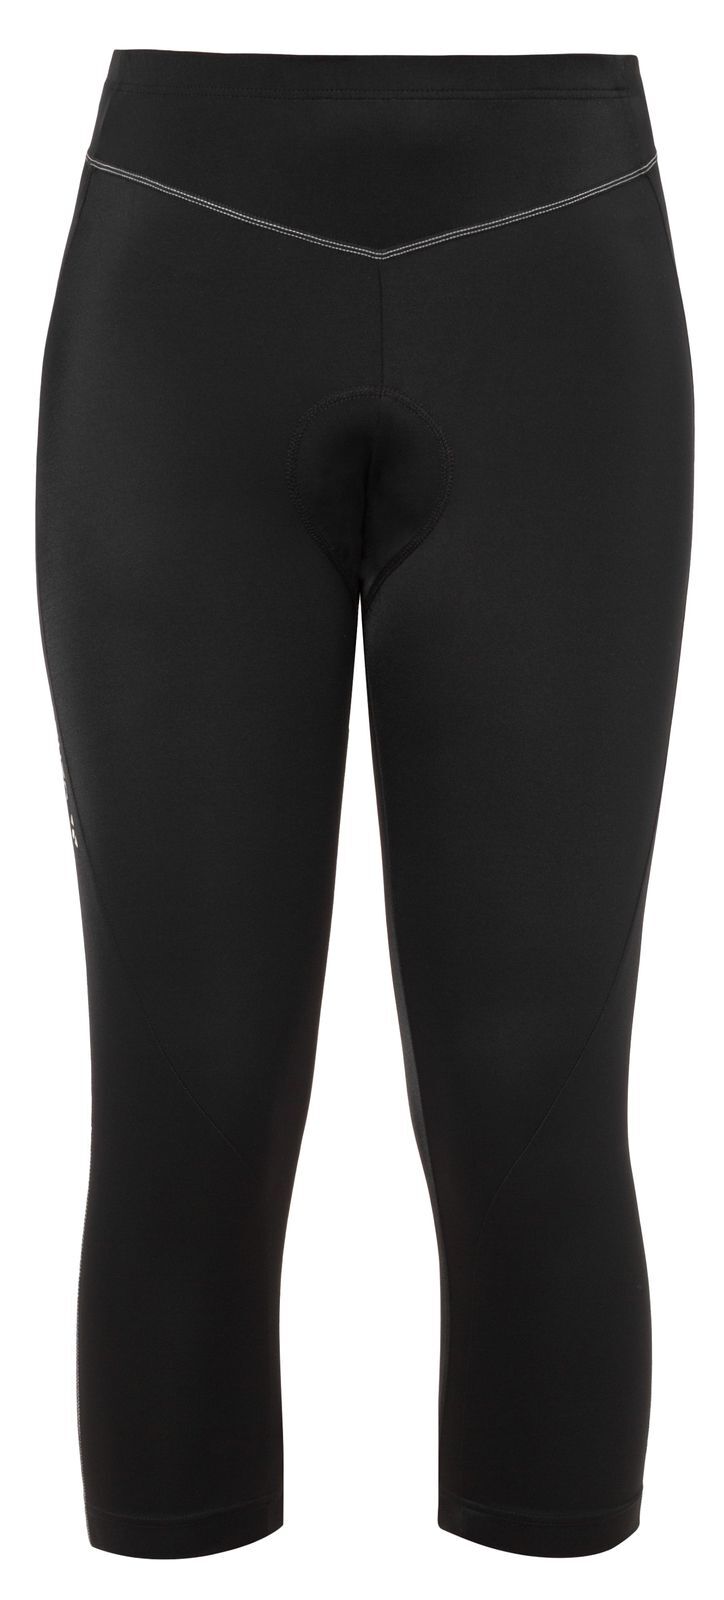 Vaude Active 3/4 Pants - Cycling trousers - Women's